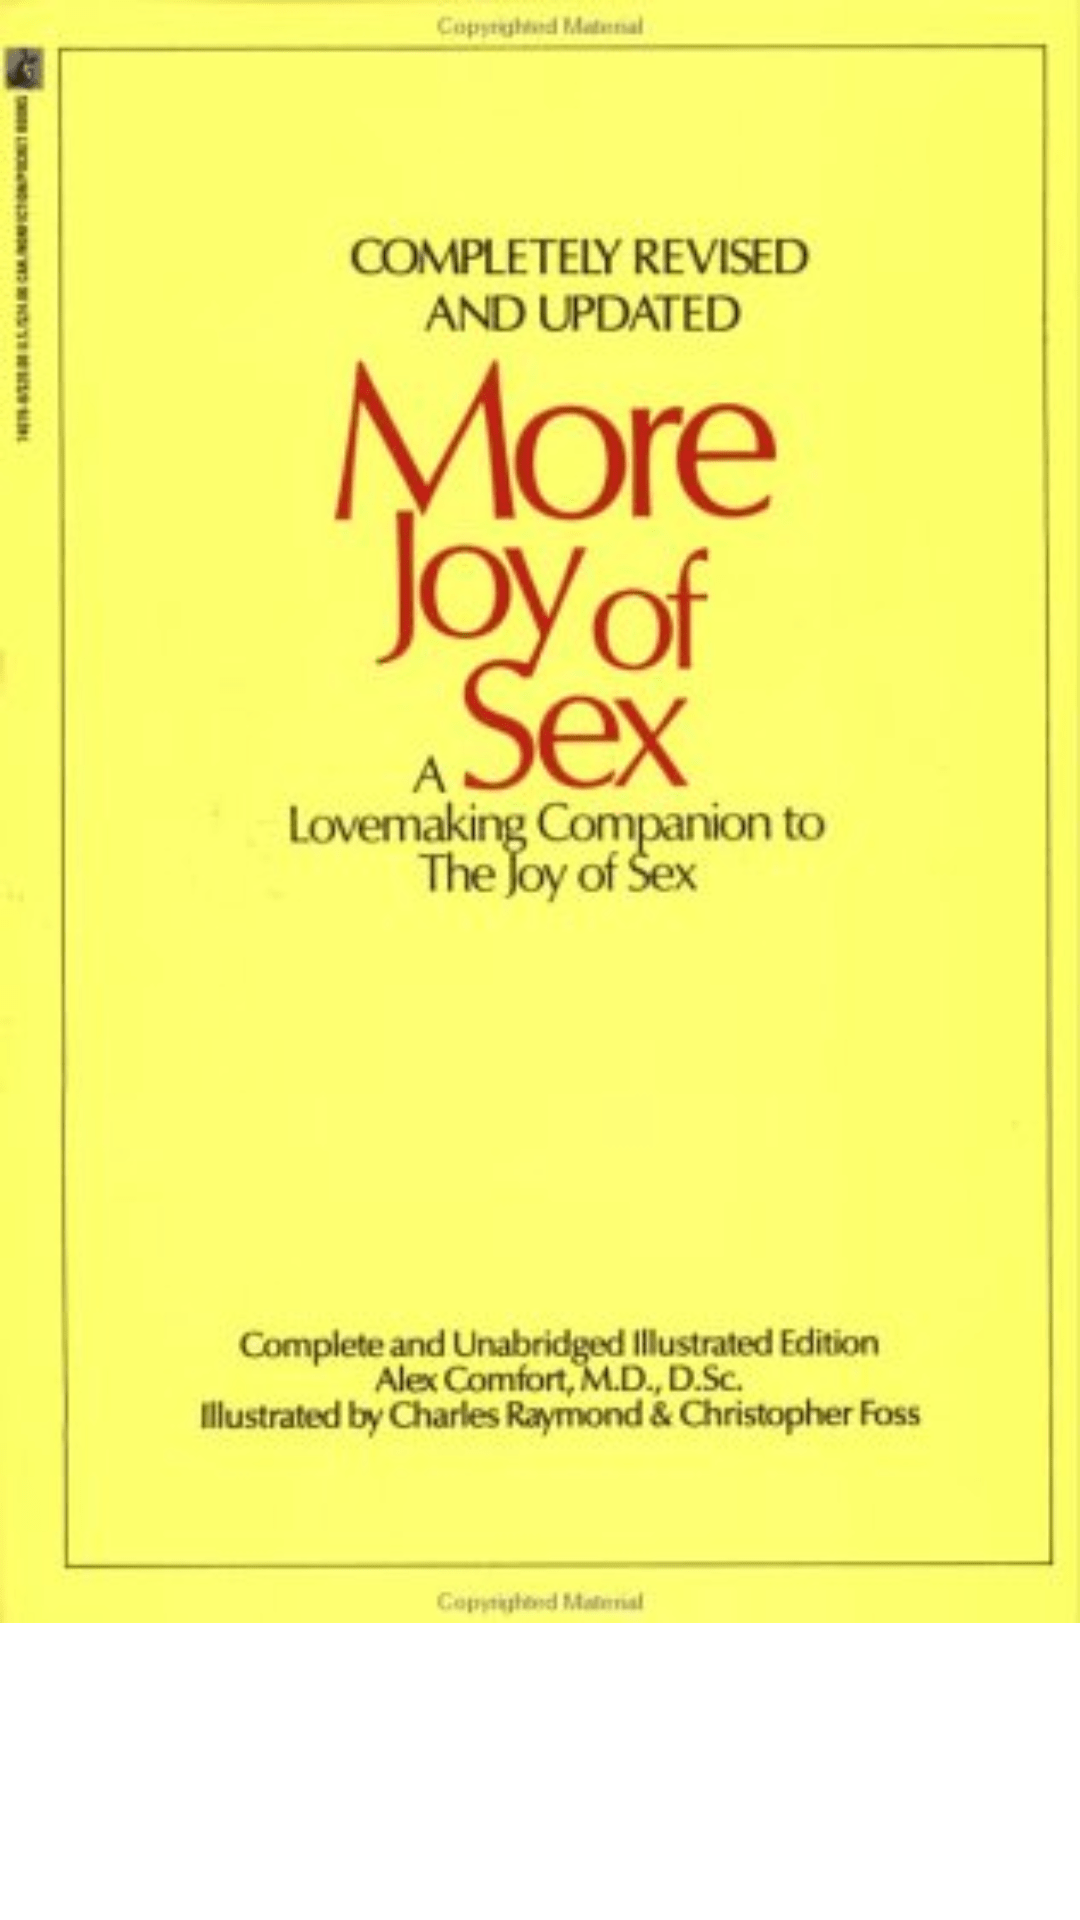 More Joy of Sex by Alex Comfort